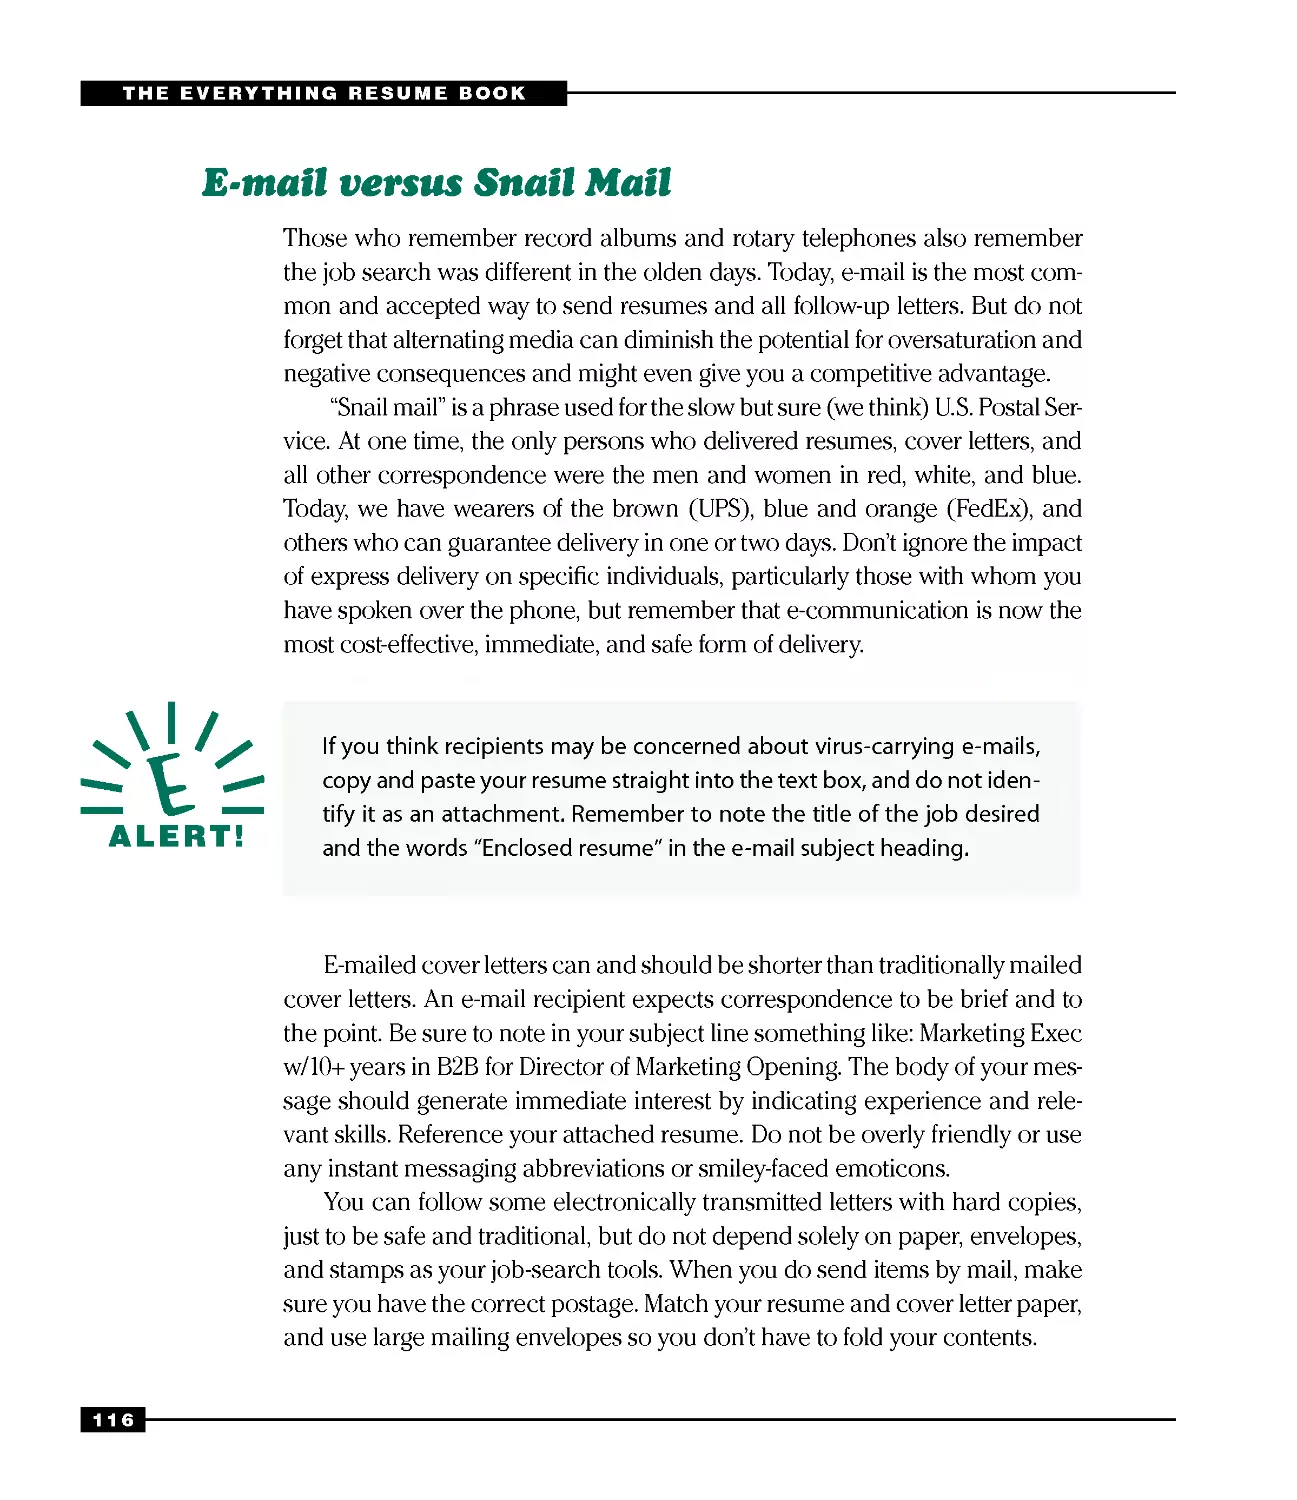 E-mail versus Snail Mail